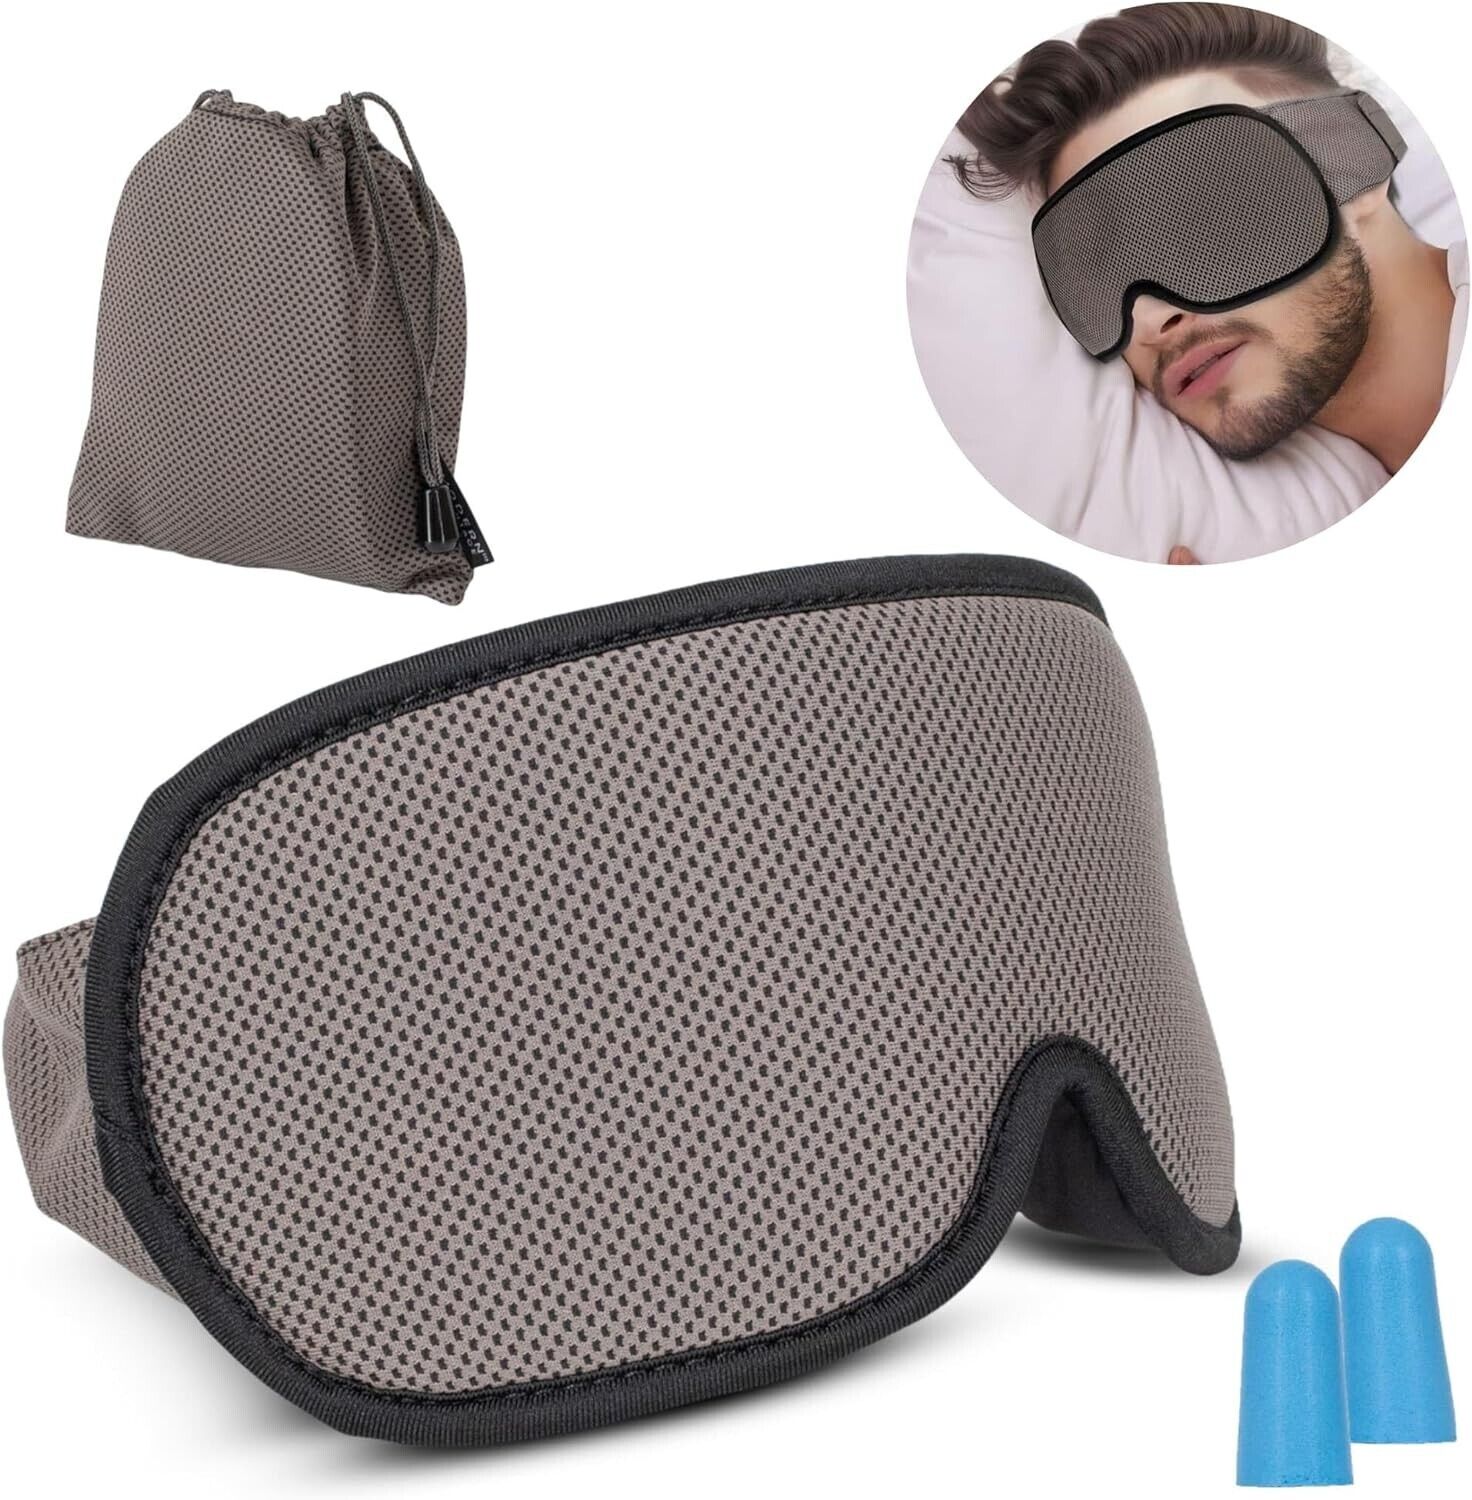 3D Sleeping Eye Mask with Earplugs, 100% Light Blocking Sleep Mask for Men Women